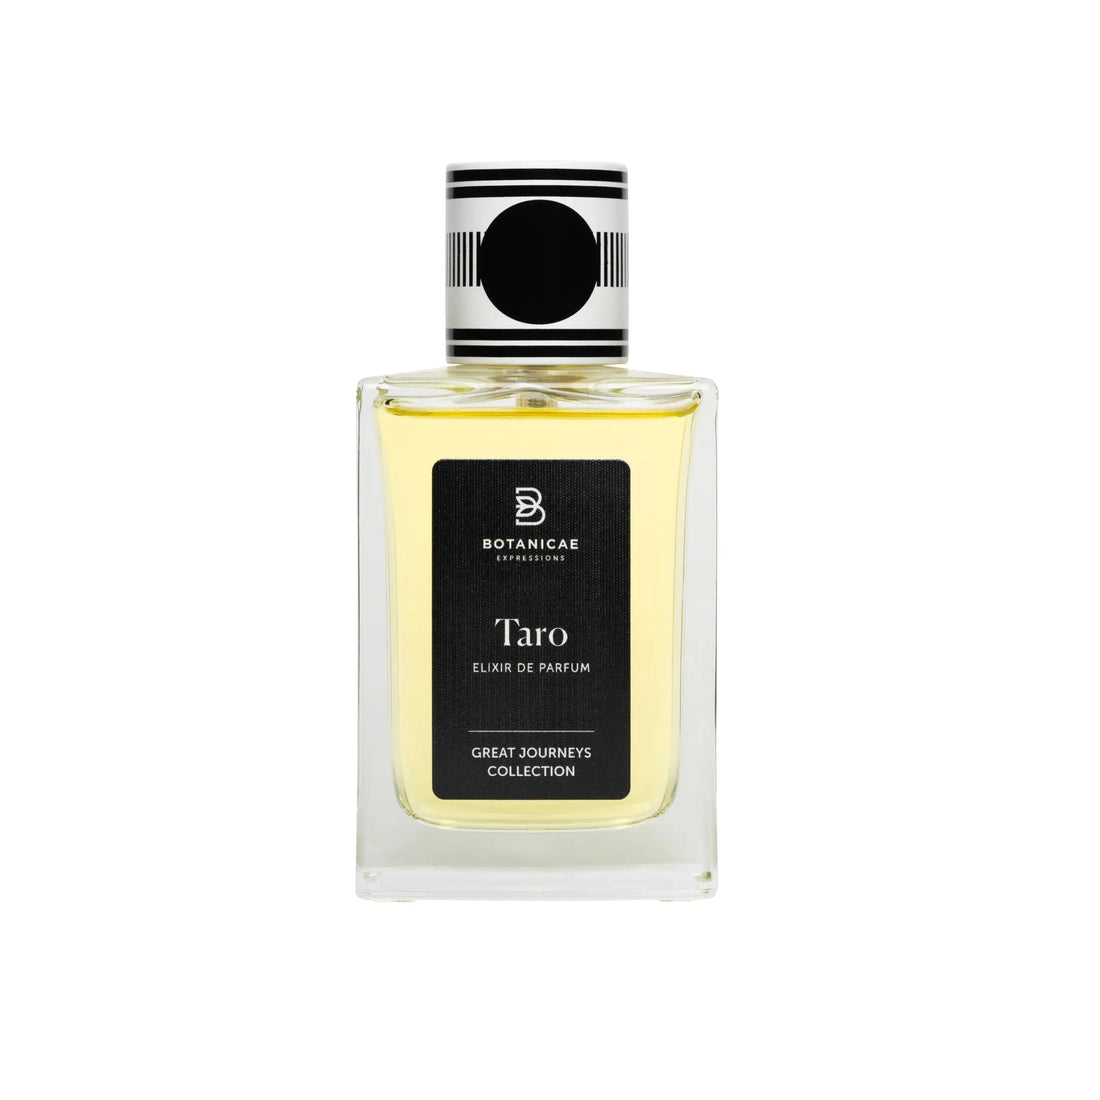 Taro Elixir de parfum Botanicae - 75 мл